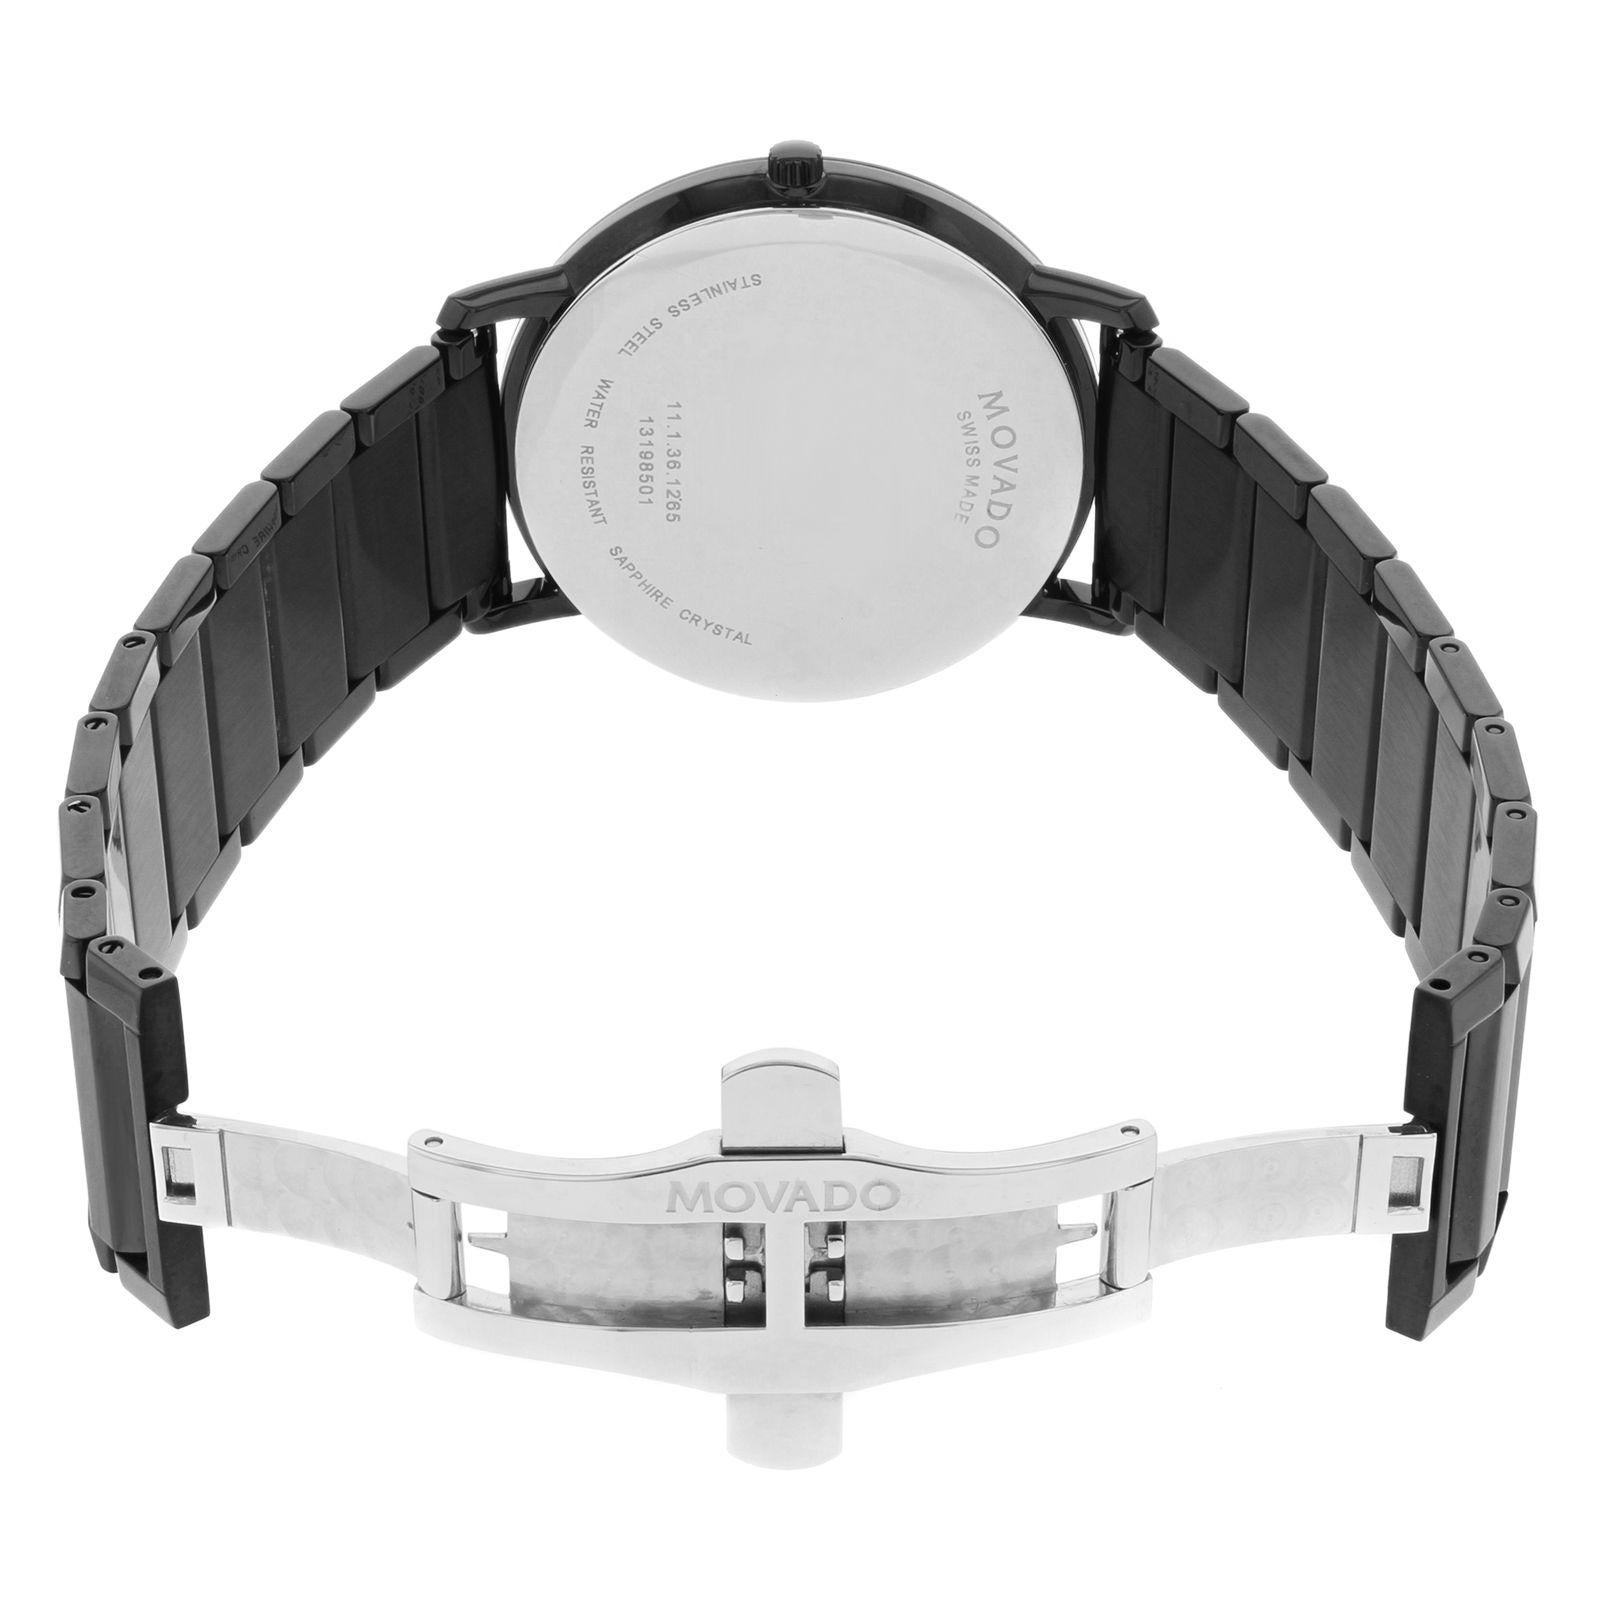 Movado Sapphire Black Dial Analog PVD Thin Steel Quartz Men's Watch 0606882 1